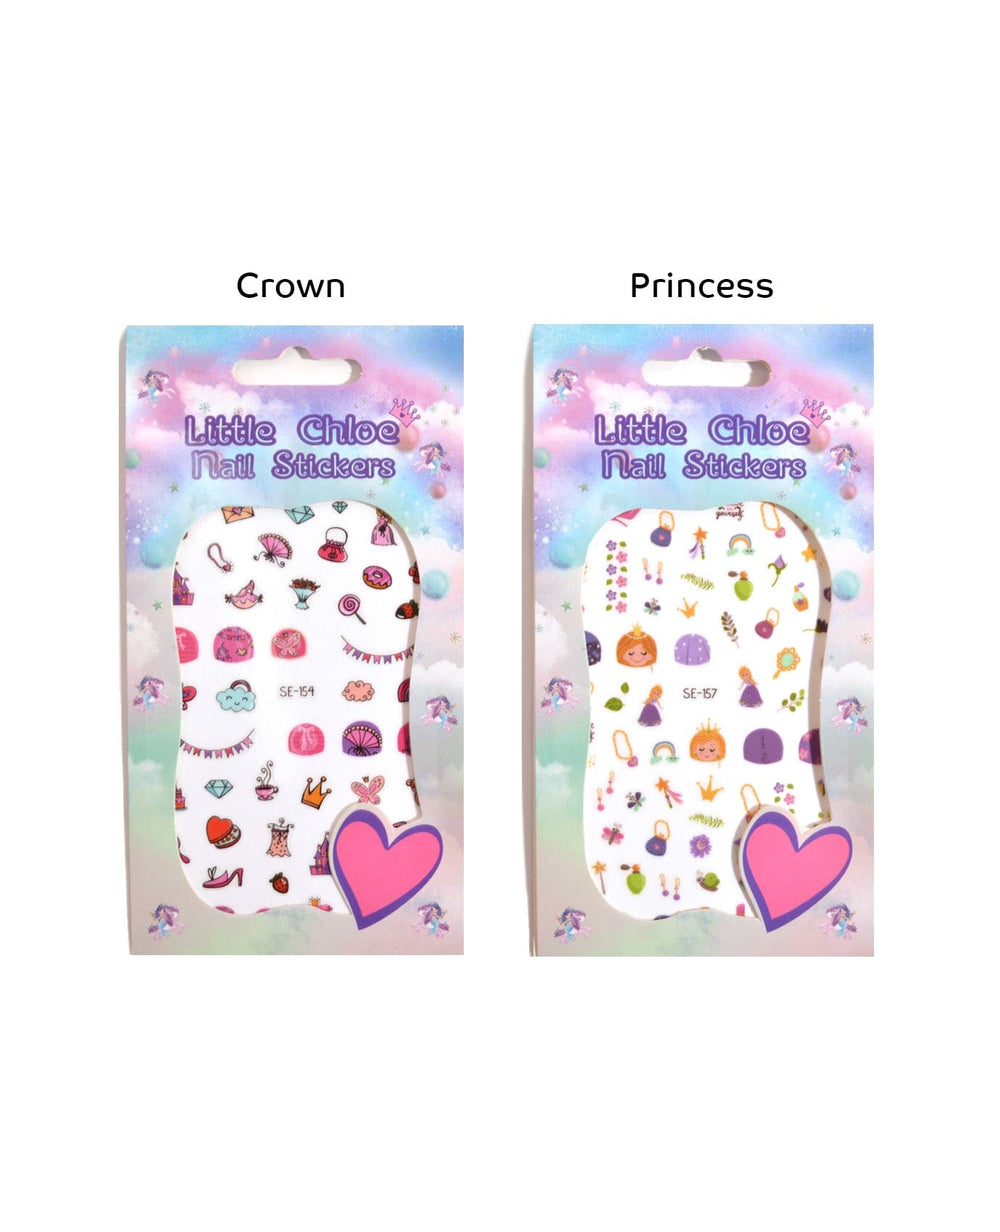 $1 Princess Nail Stickers